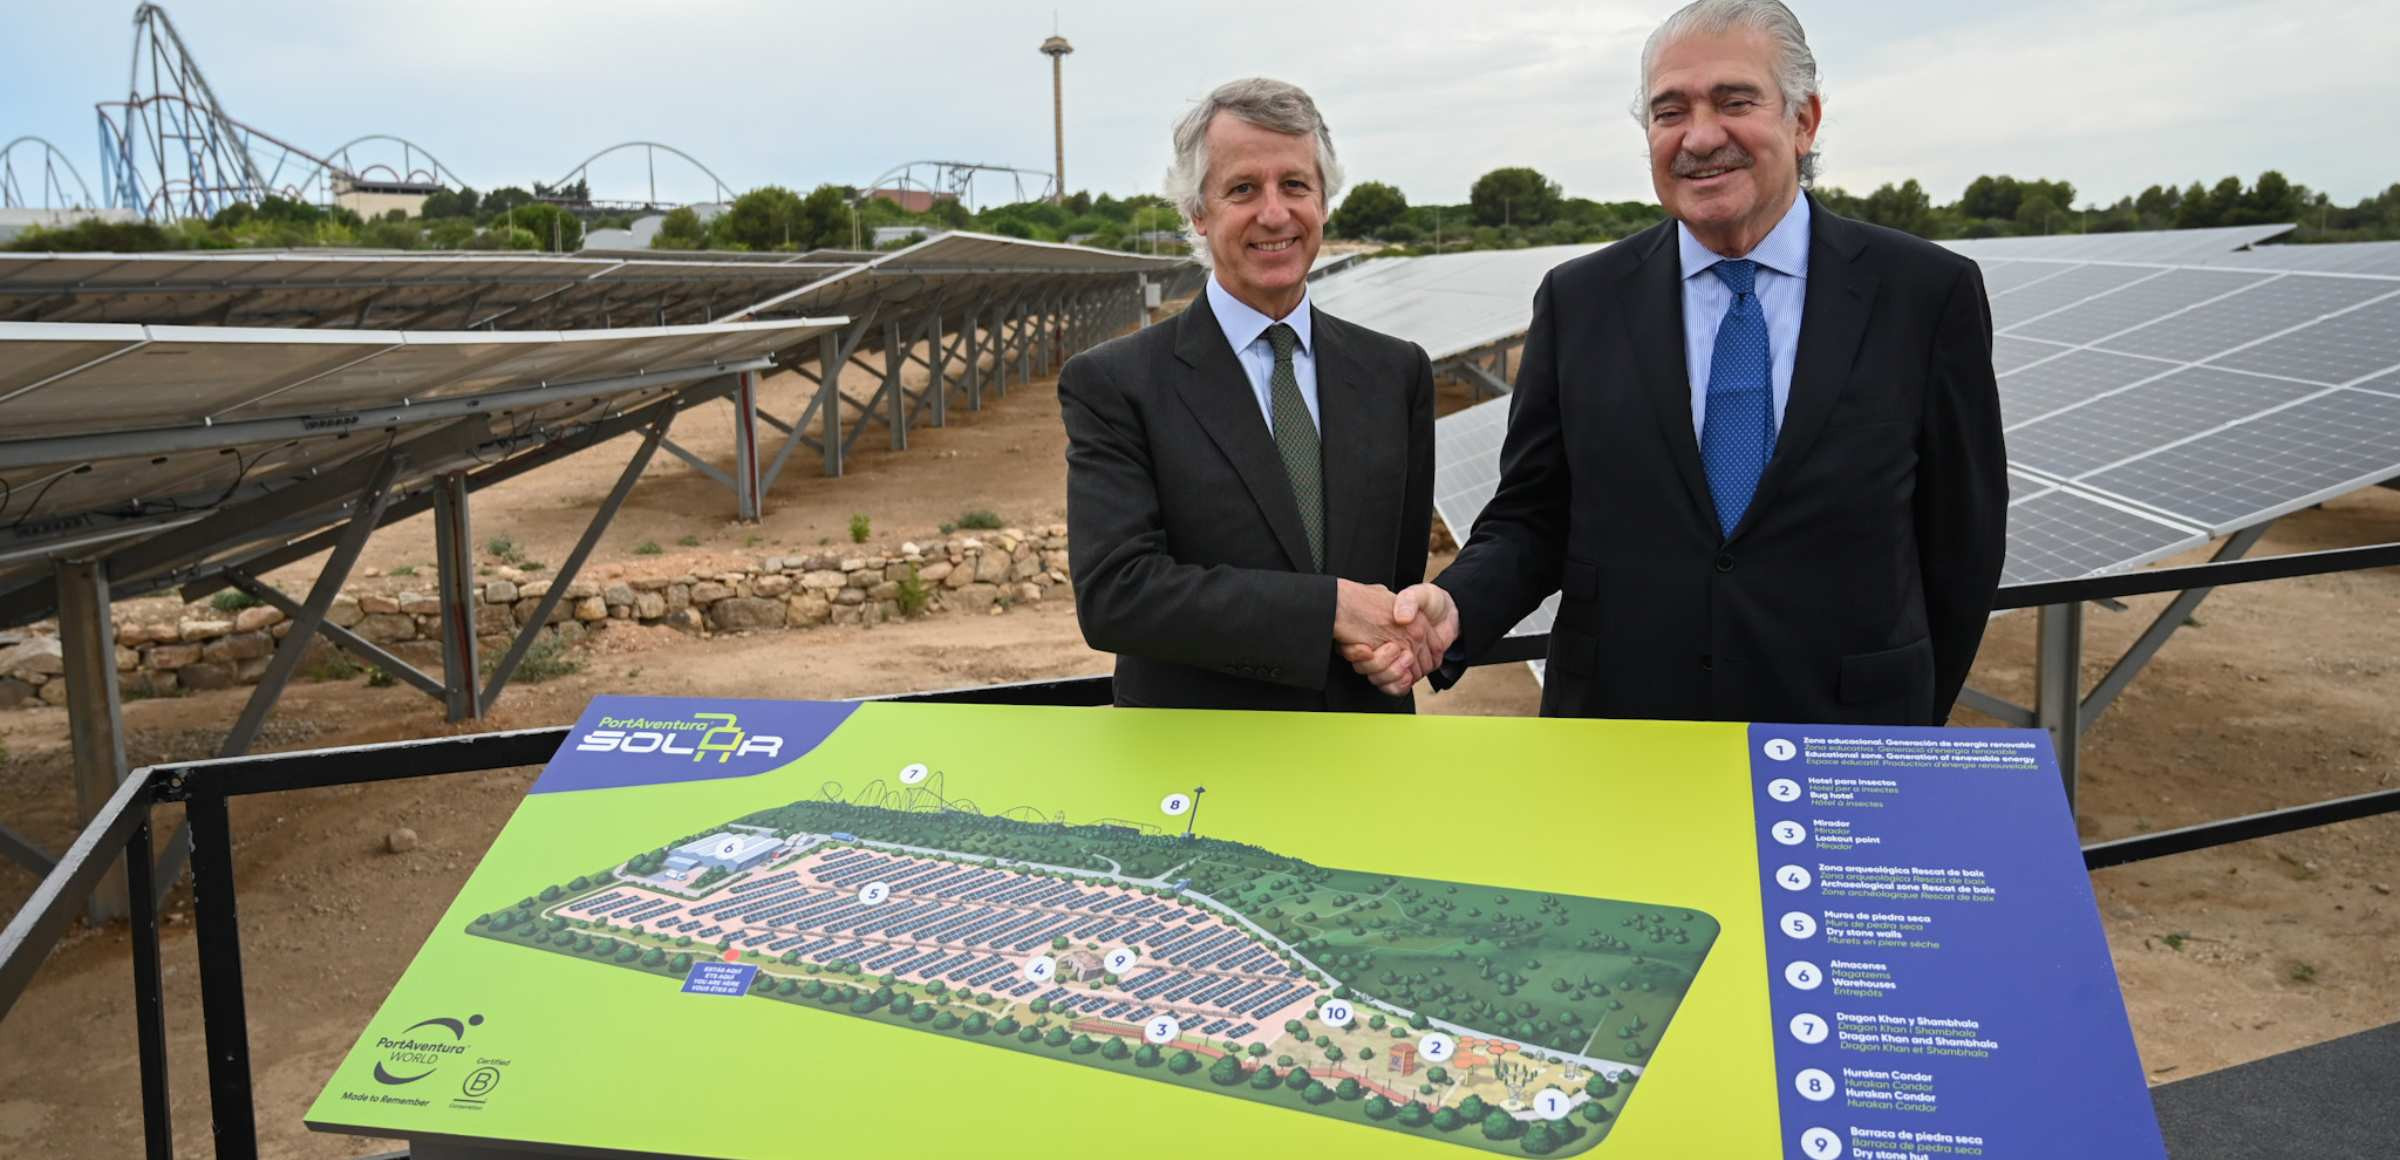 PortAventura World inaugura PortAventura Solar